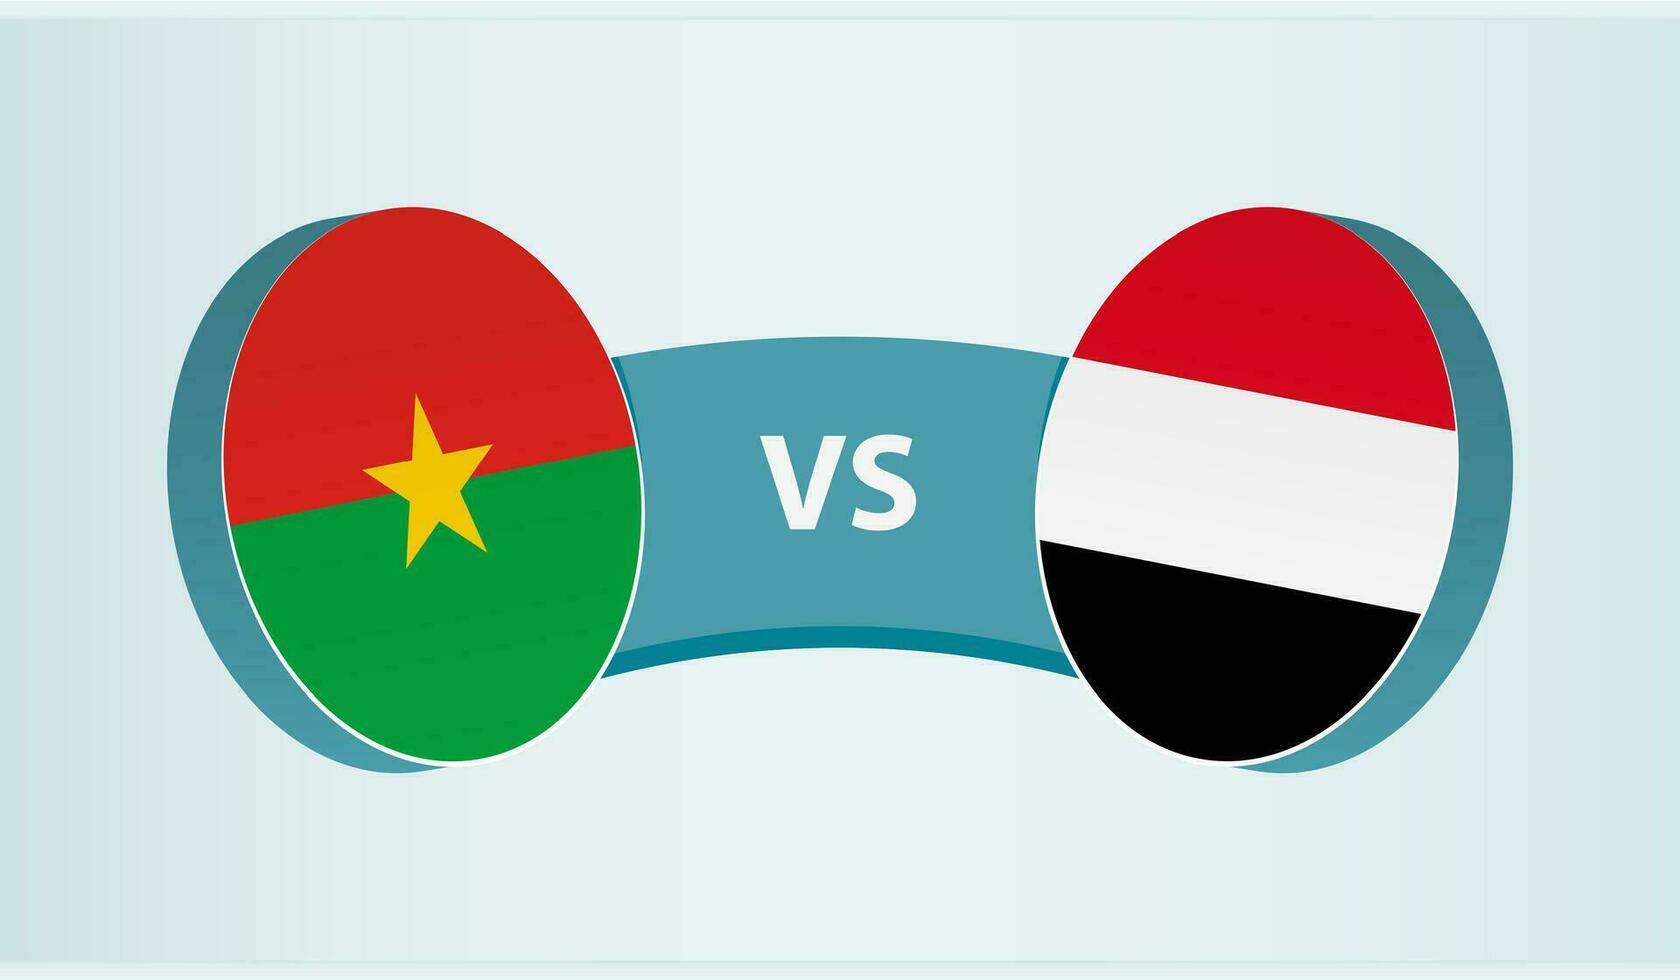 Burkina Faso versus Yemen, team sports competition concept. vector